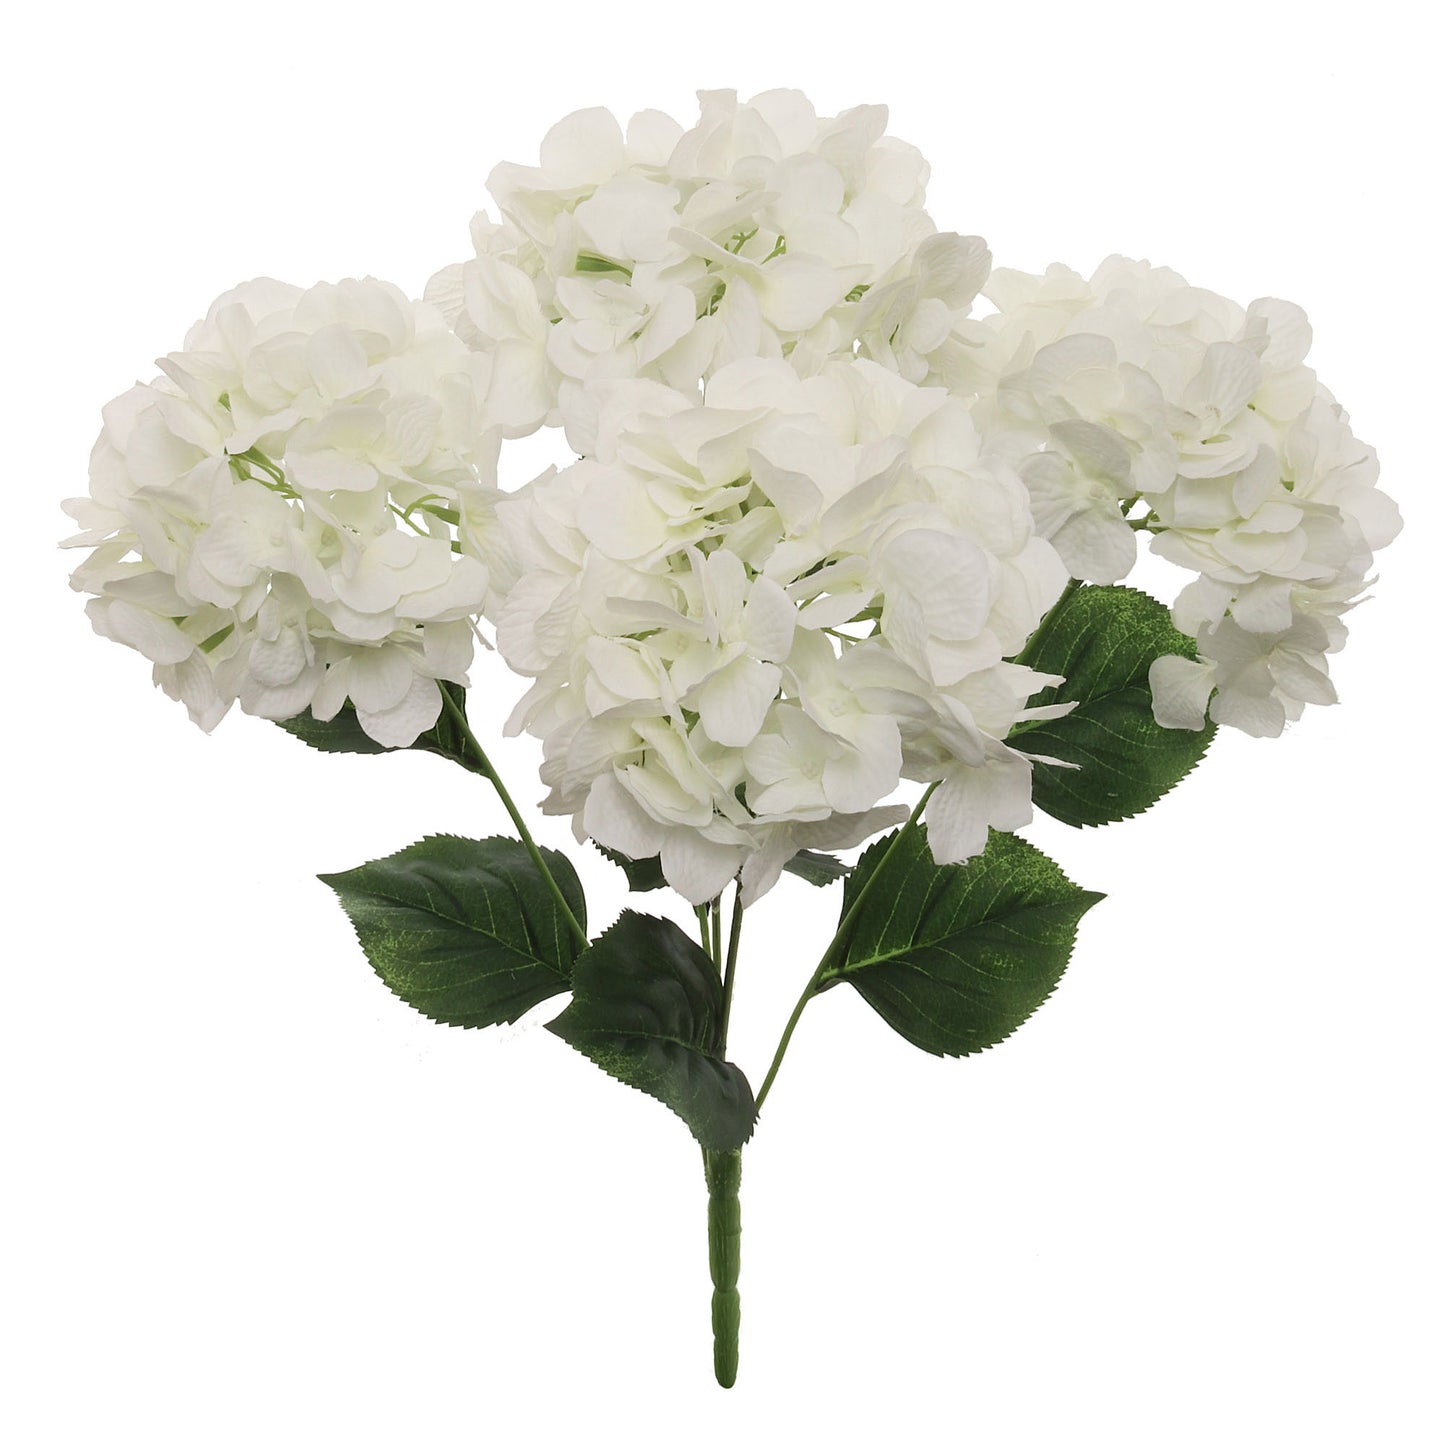 Stunning 21" Artificial White Hydrangea Bush with 5 Premium Faux Silk Flower Heads - Lifelike Floral Arrangement for Home Decor, Weddings & Events - Elegant & Realistic Silk Hydrangeas